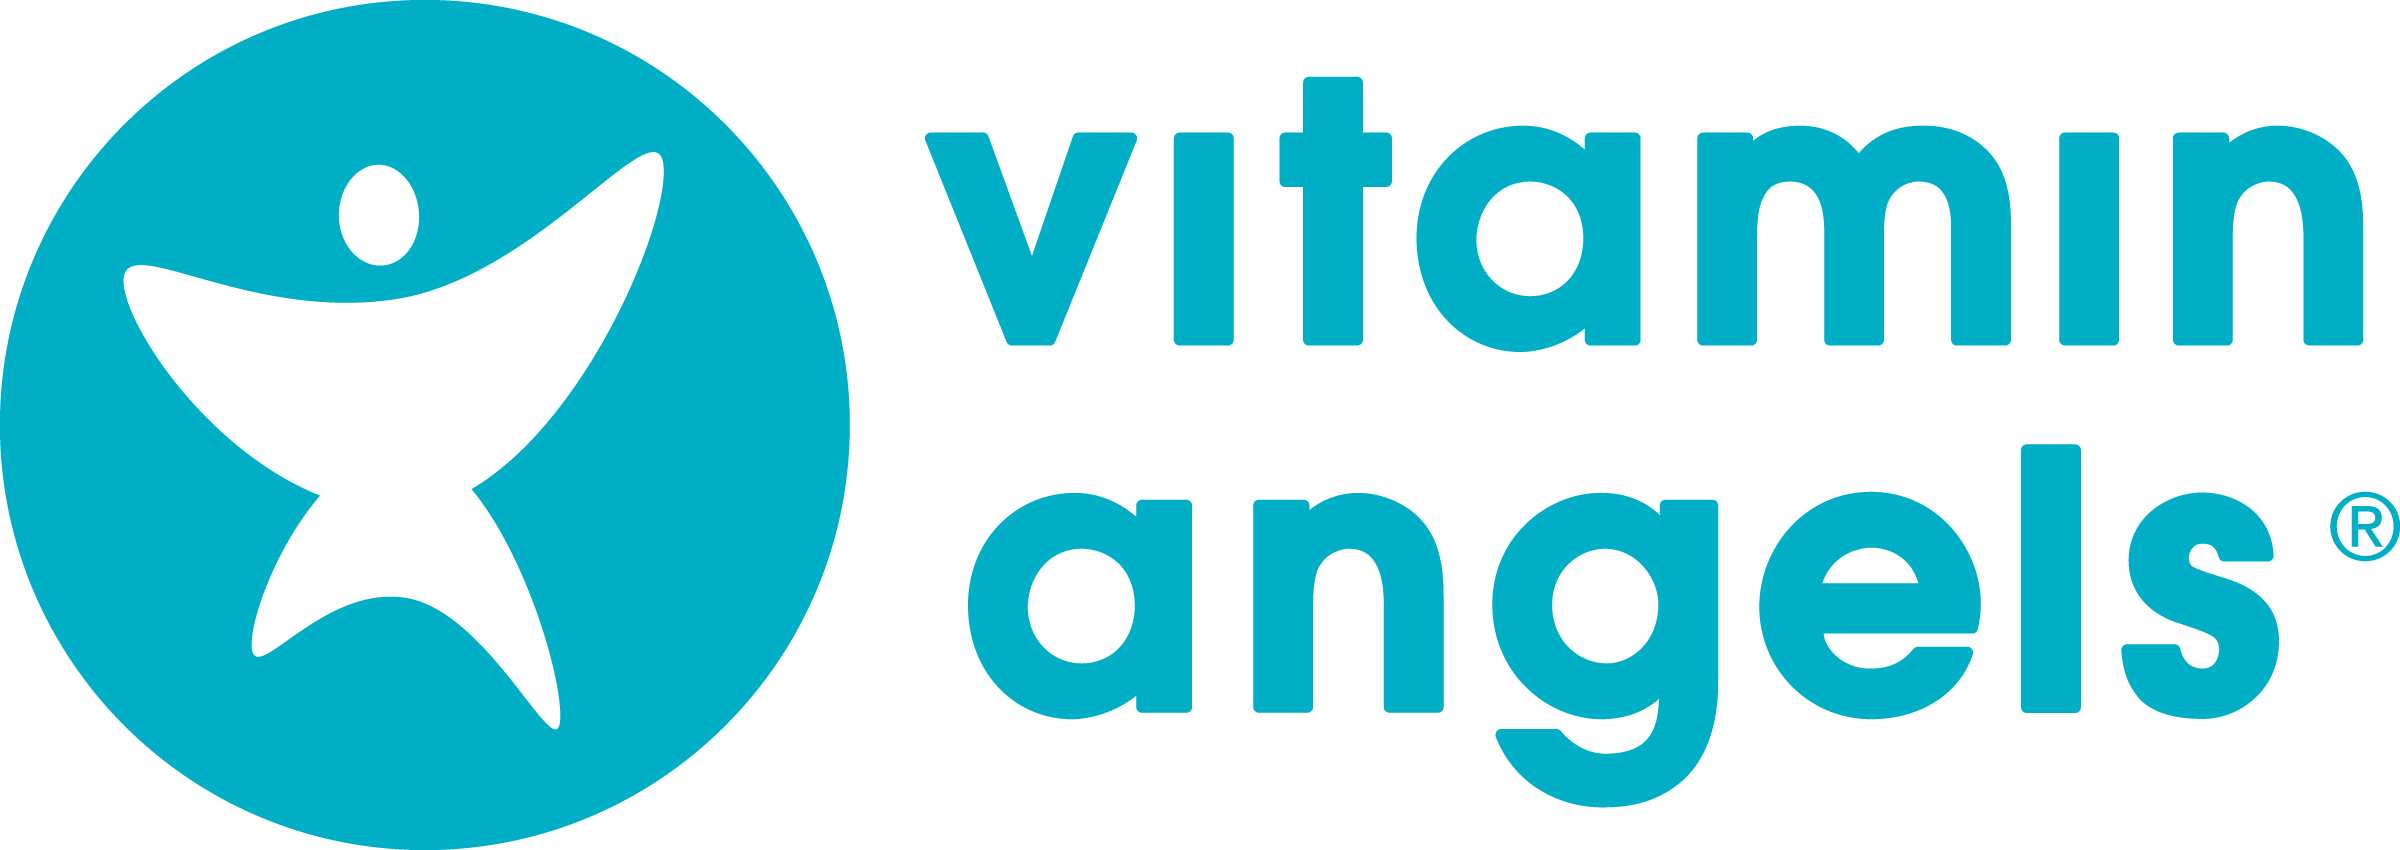 vitamin-angels